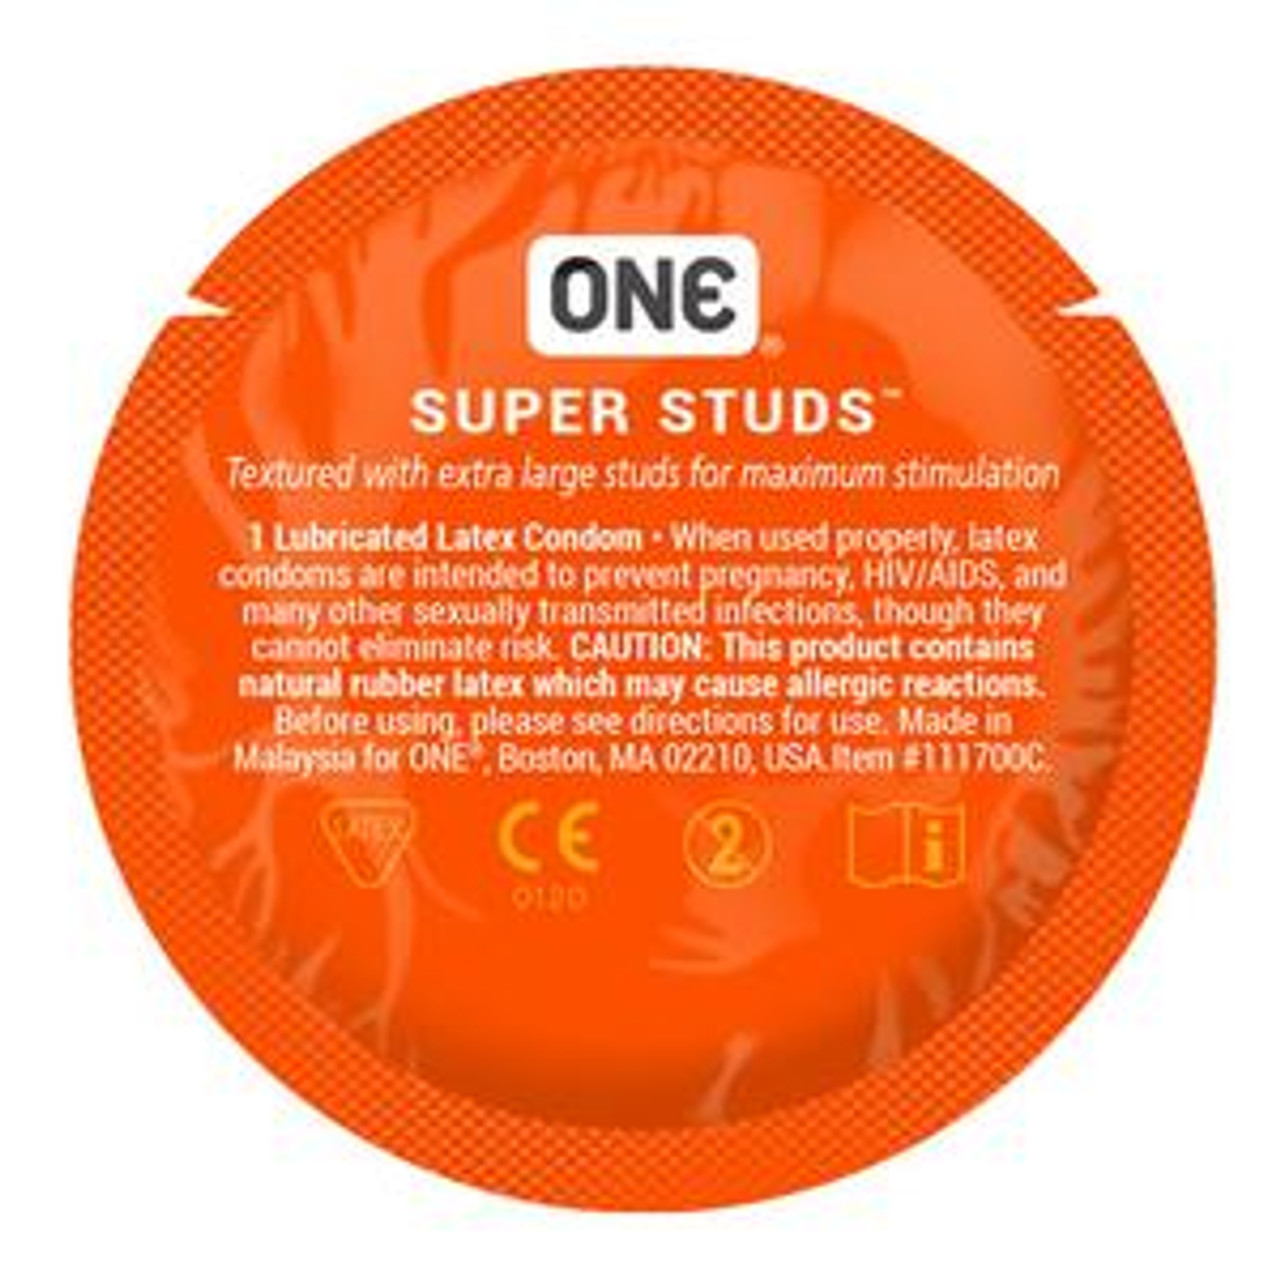 ONE Super Studs Condoms - Buy ONE Condoms | CondomDepot.com